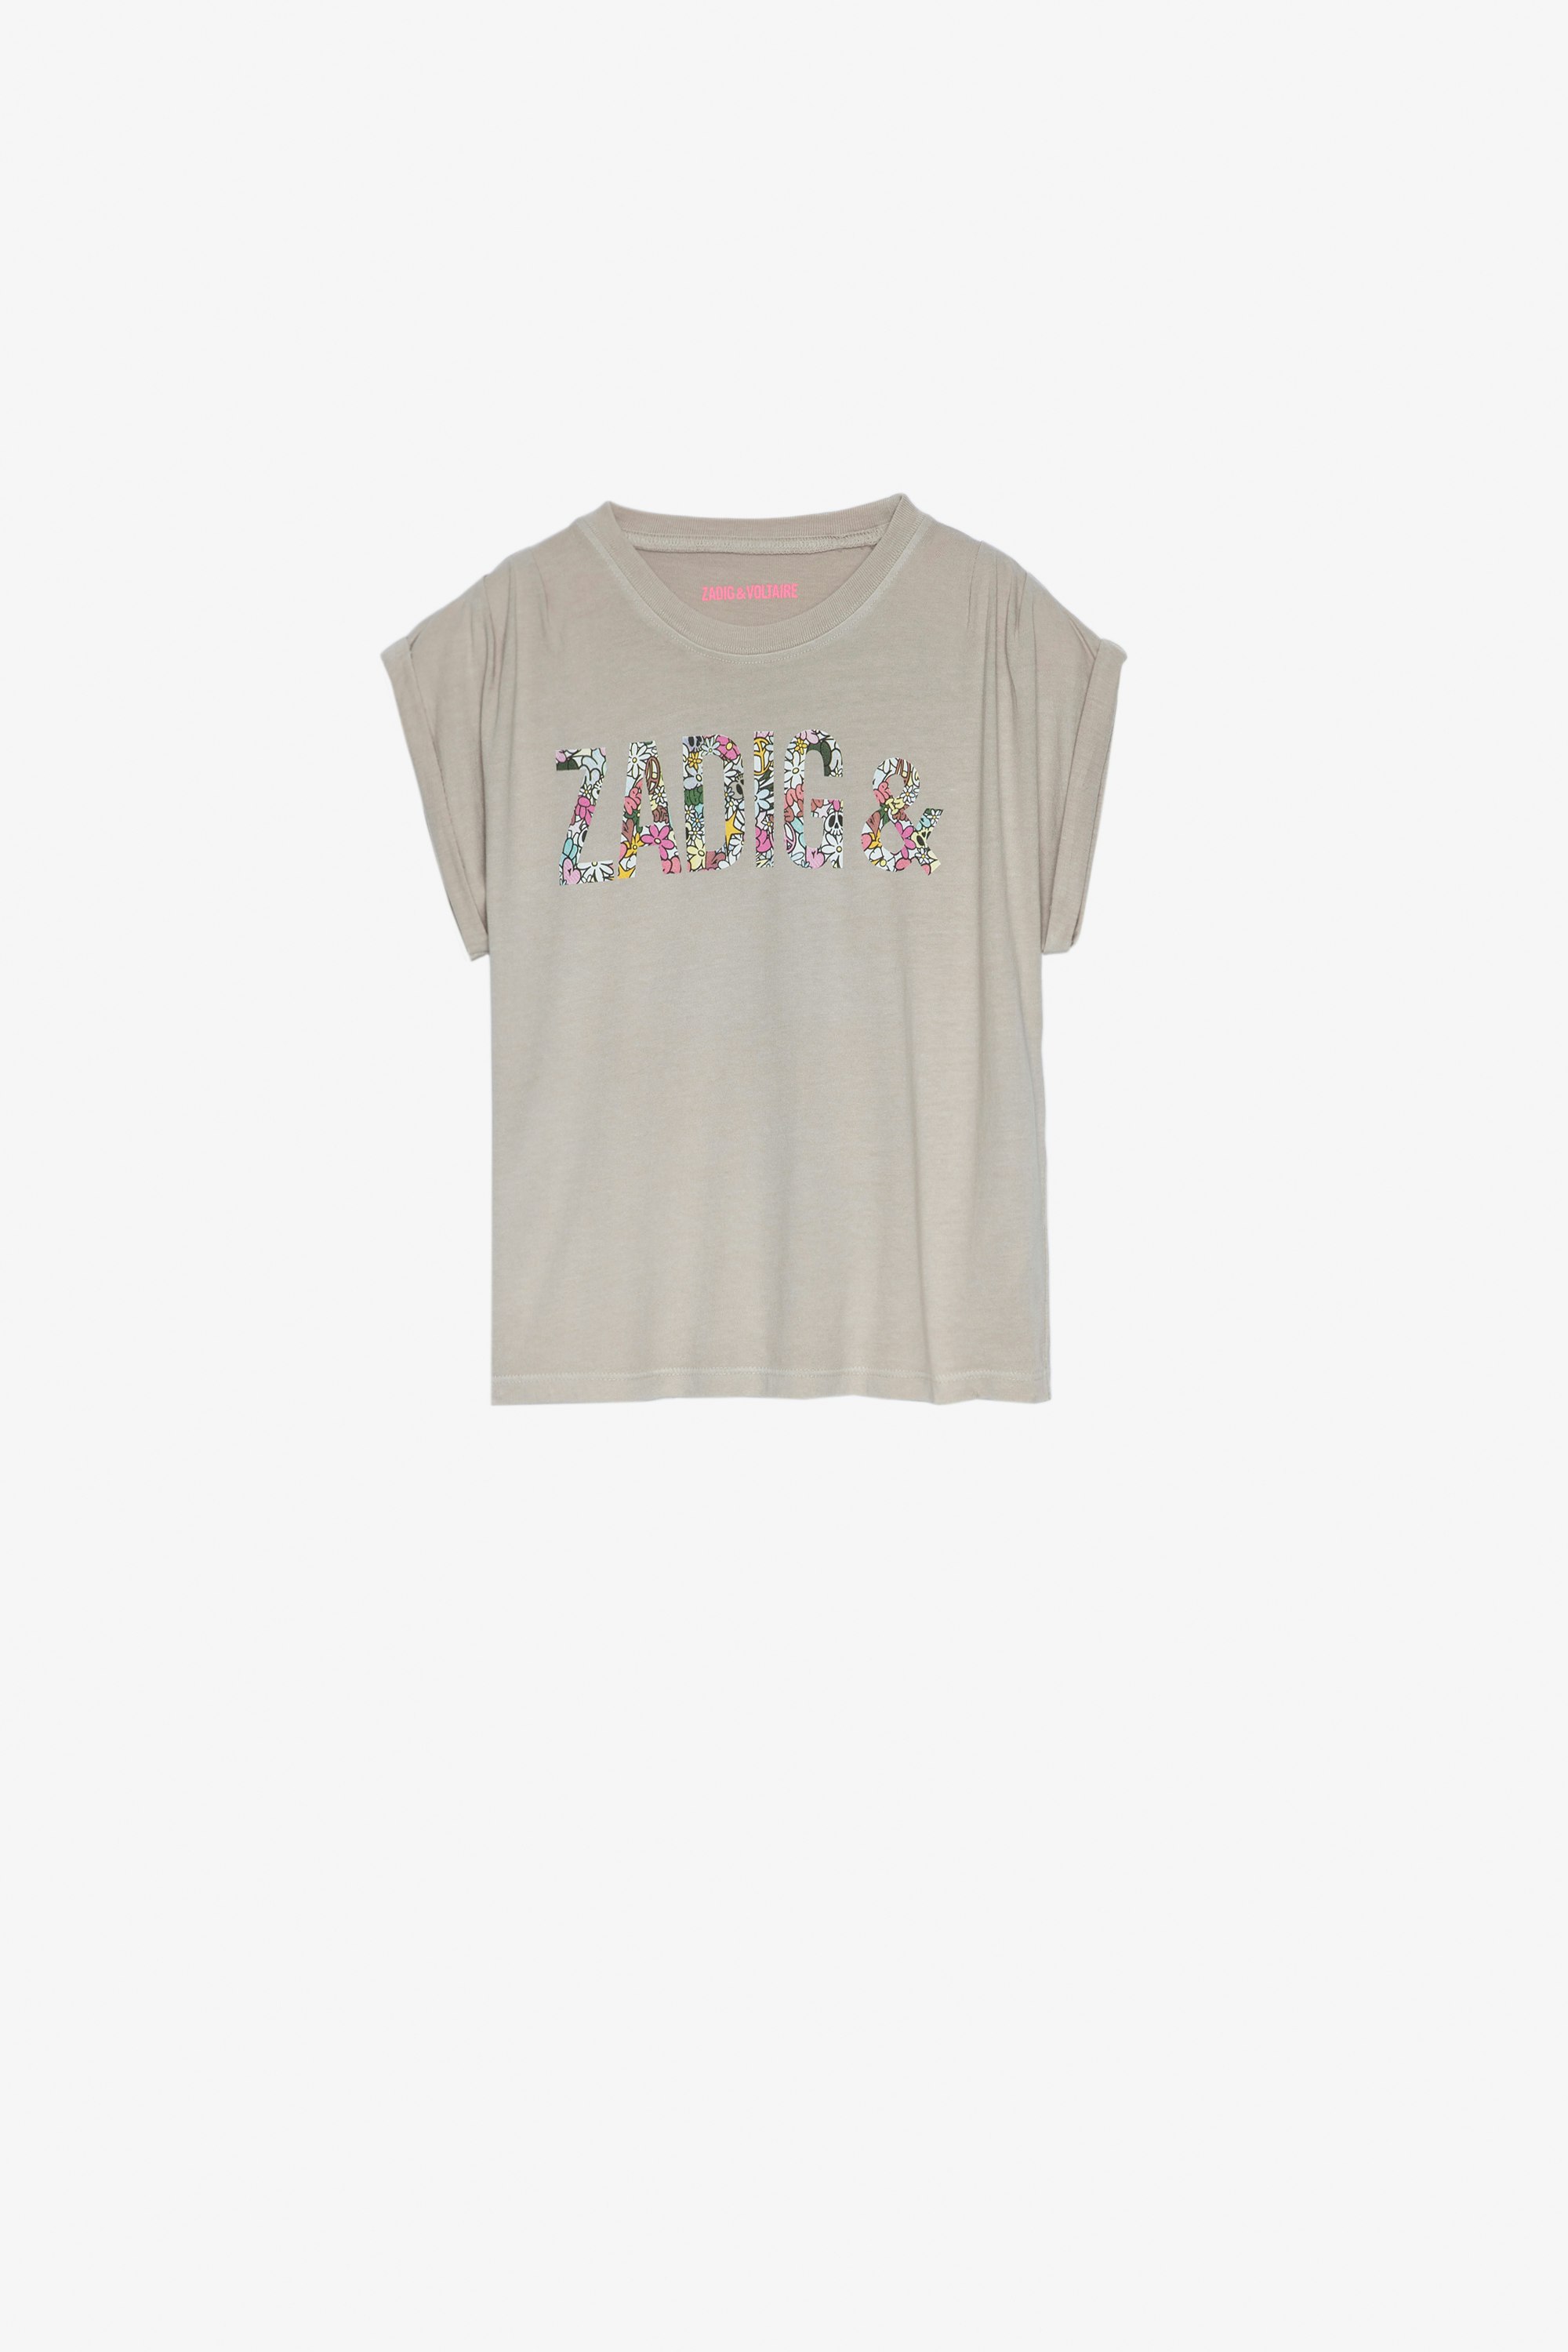 Anie Kids' T-Shirt Kids' brown cotton sleeveless T-shirt with ZV signature print